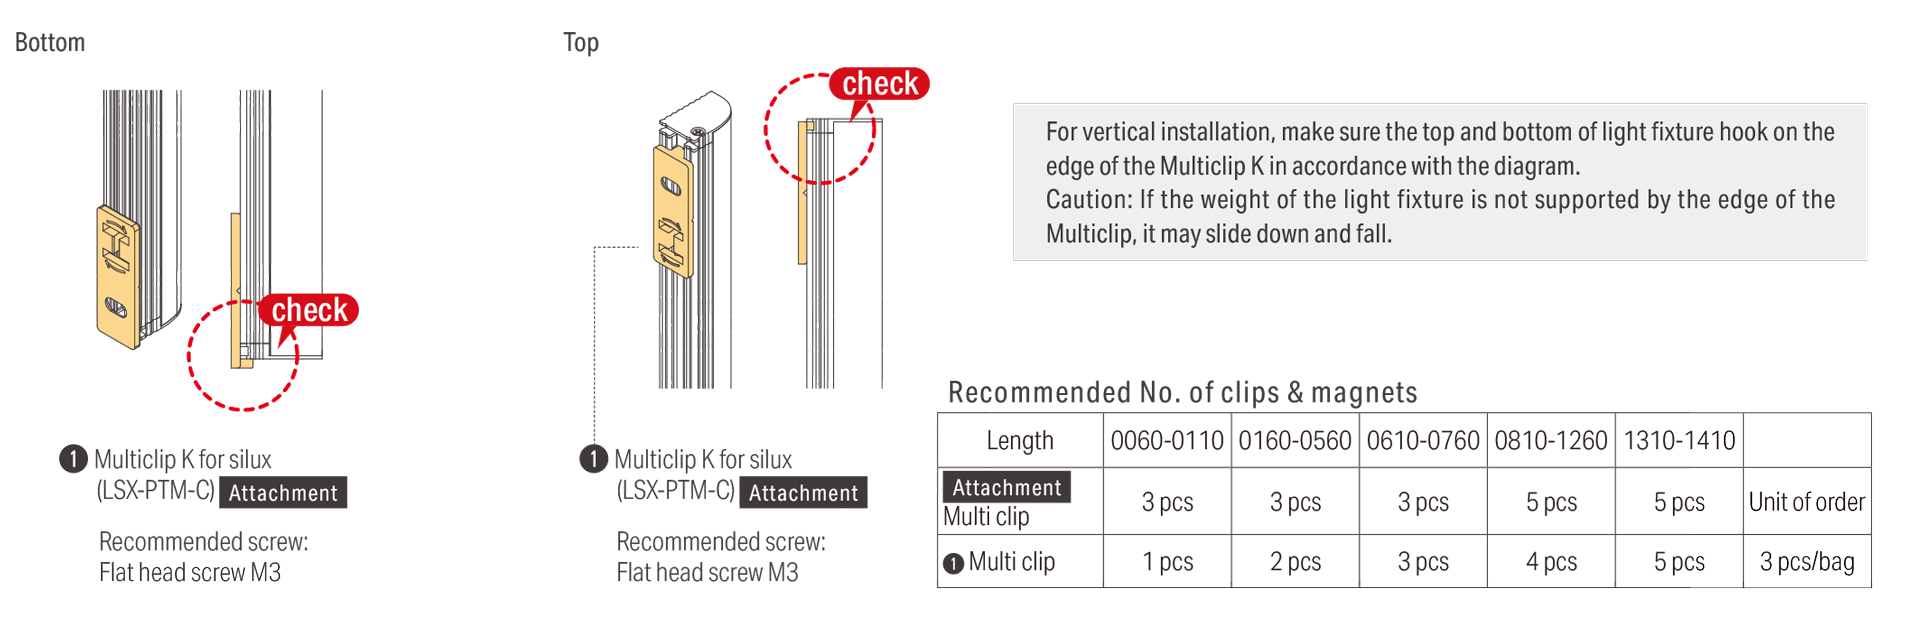 Liftclip installation: Standard installation direction